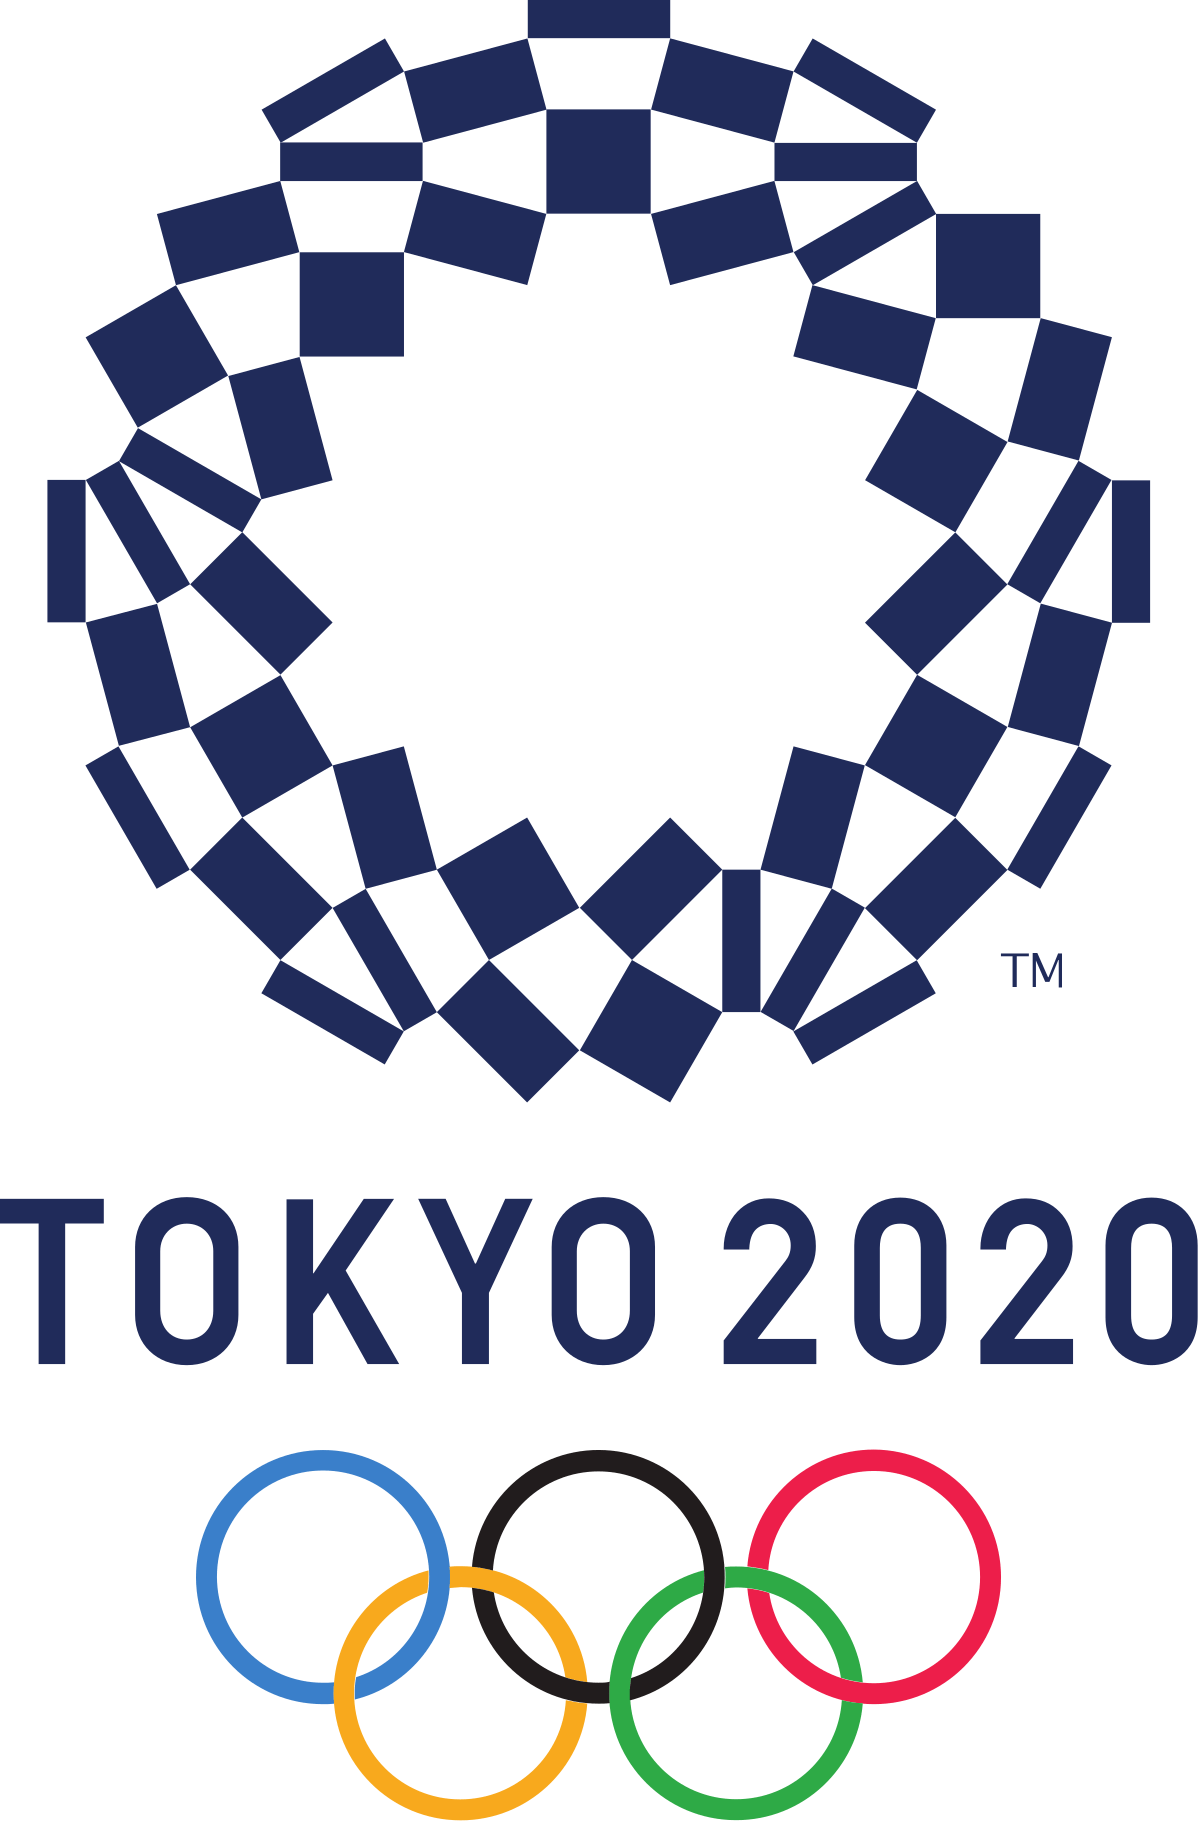 Olimpycs Logo - 2020 Summer Olympics